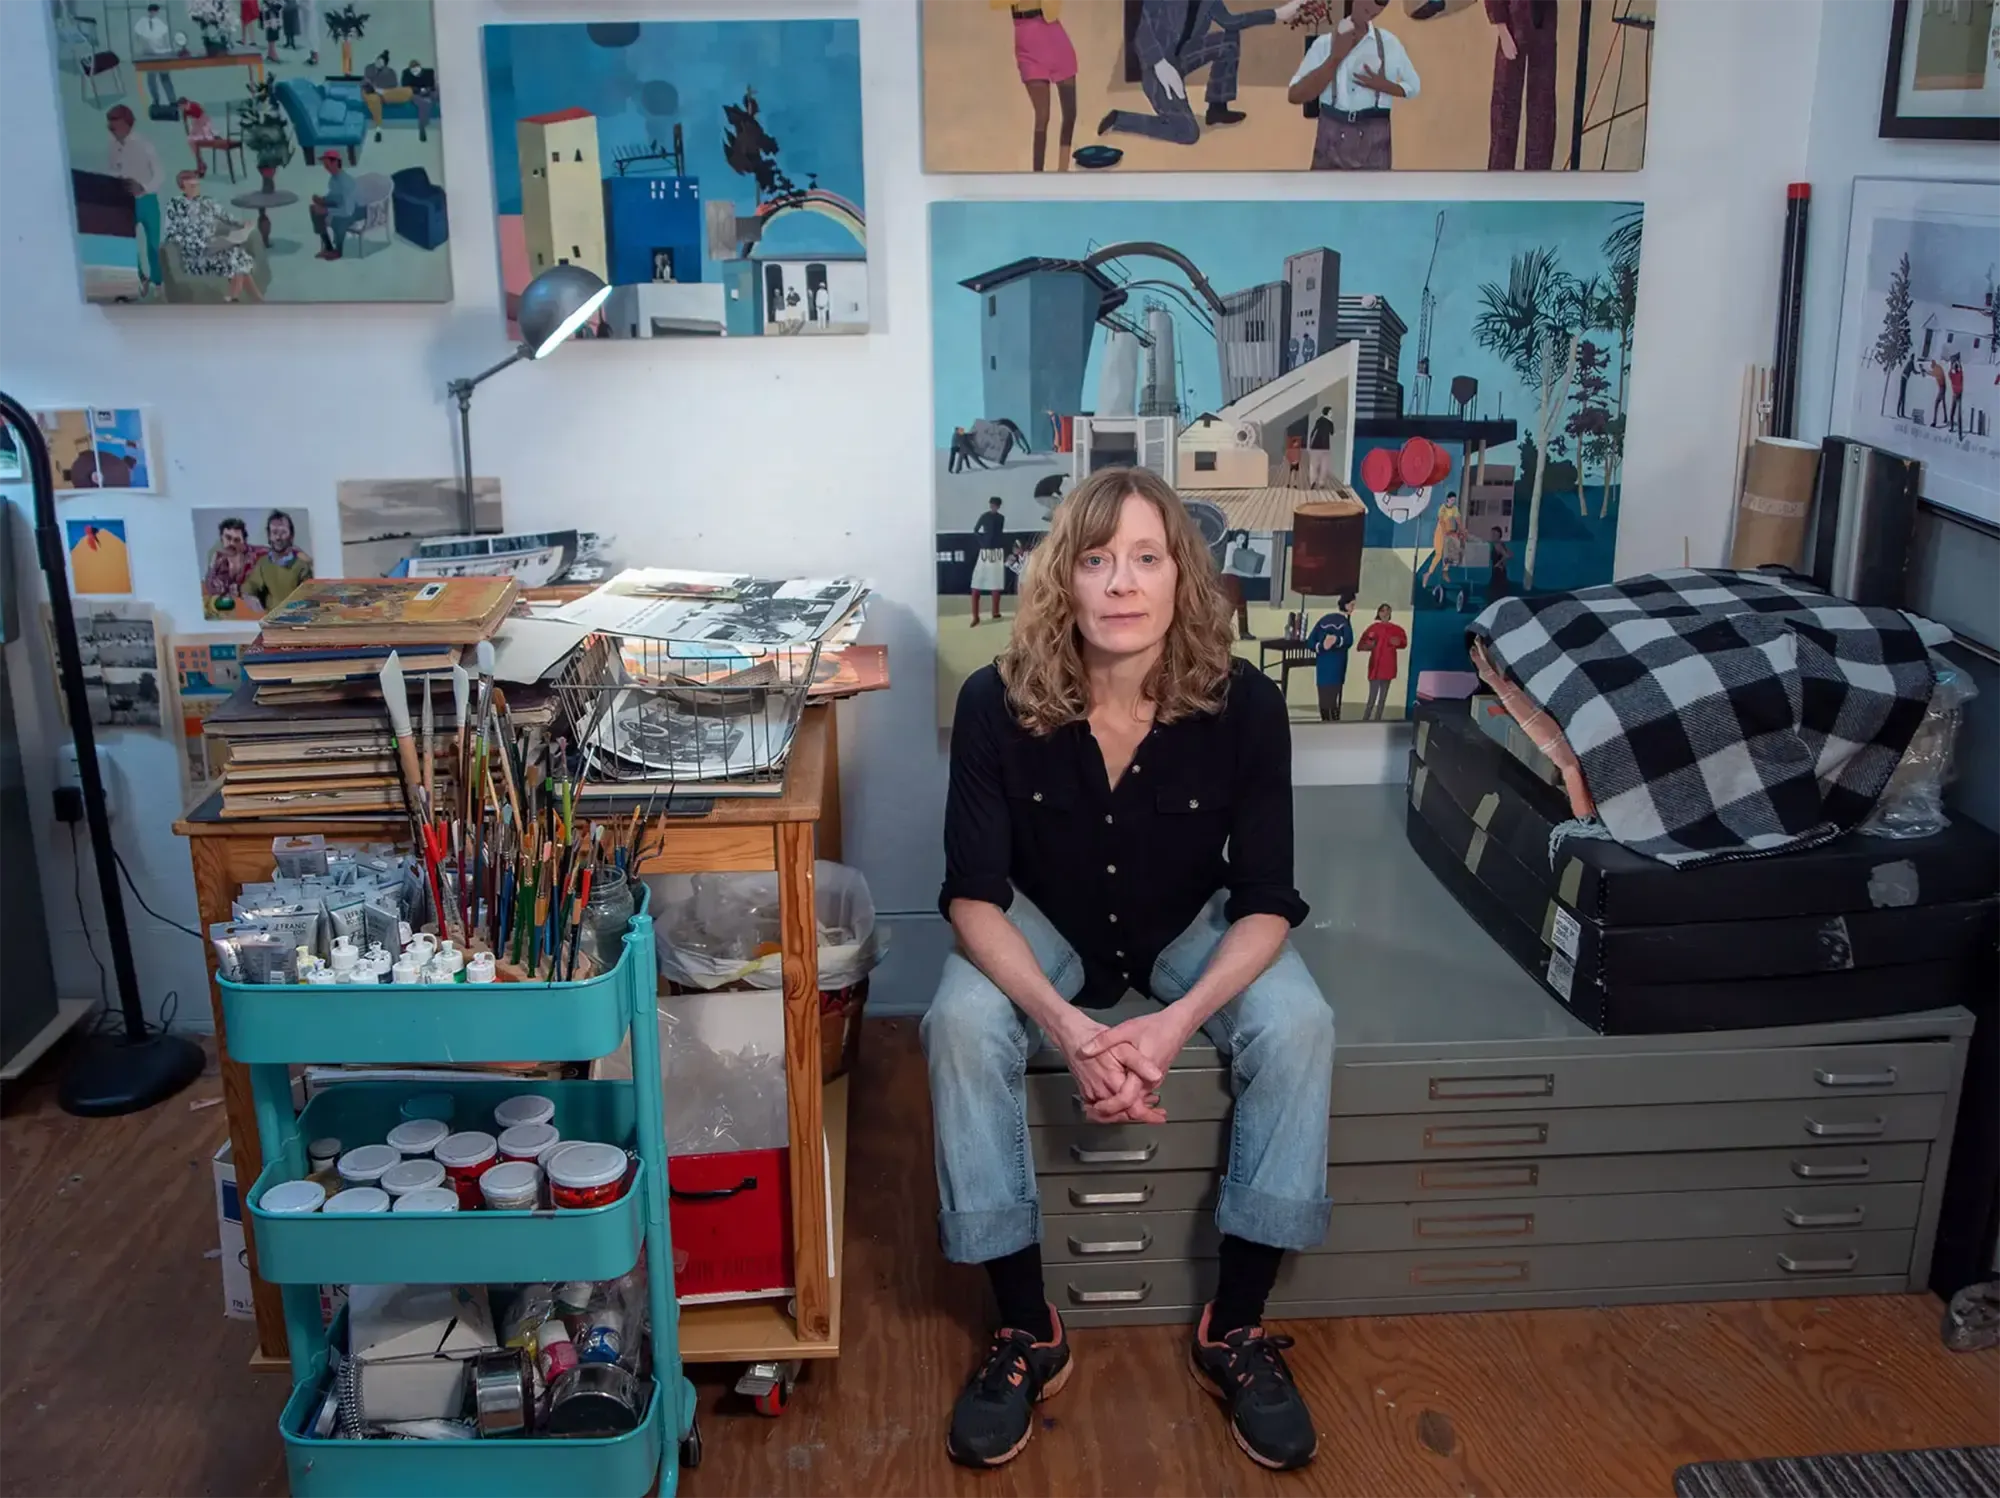 Hannah Morris emerging promising artist and female painter Steve Turner gallery Los Angeles interview profile